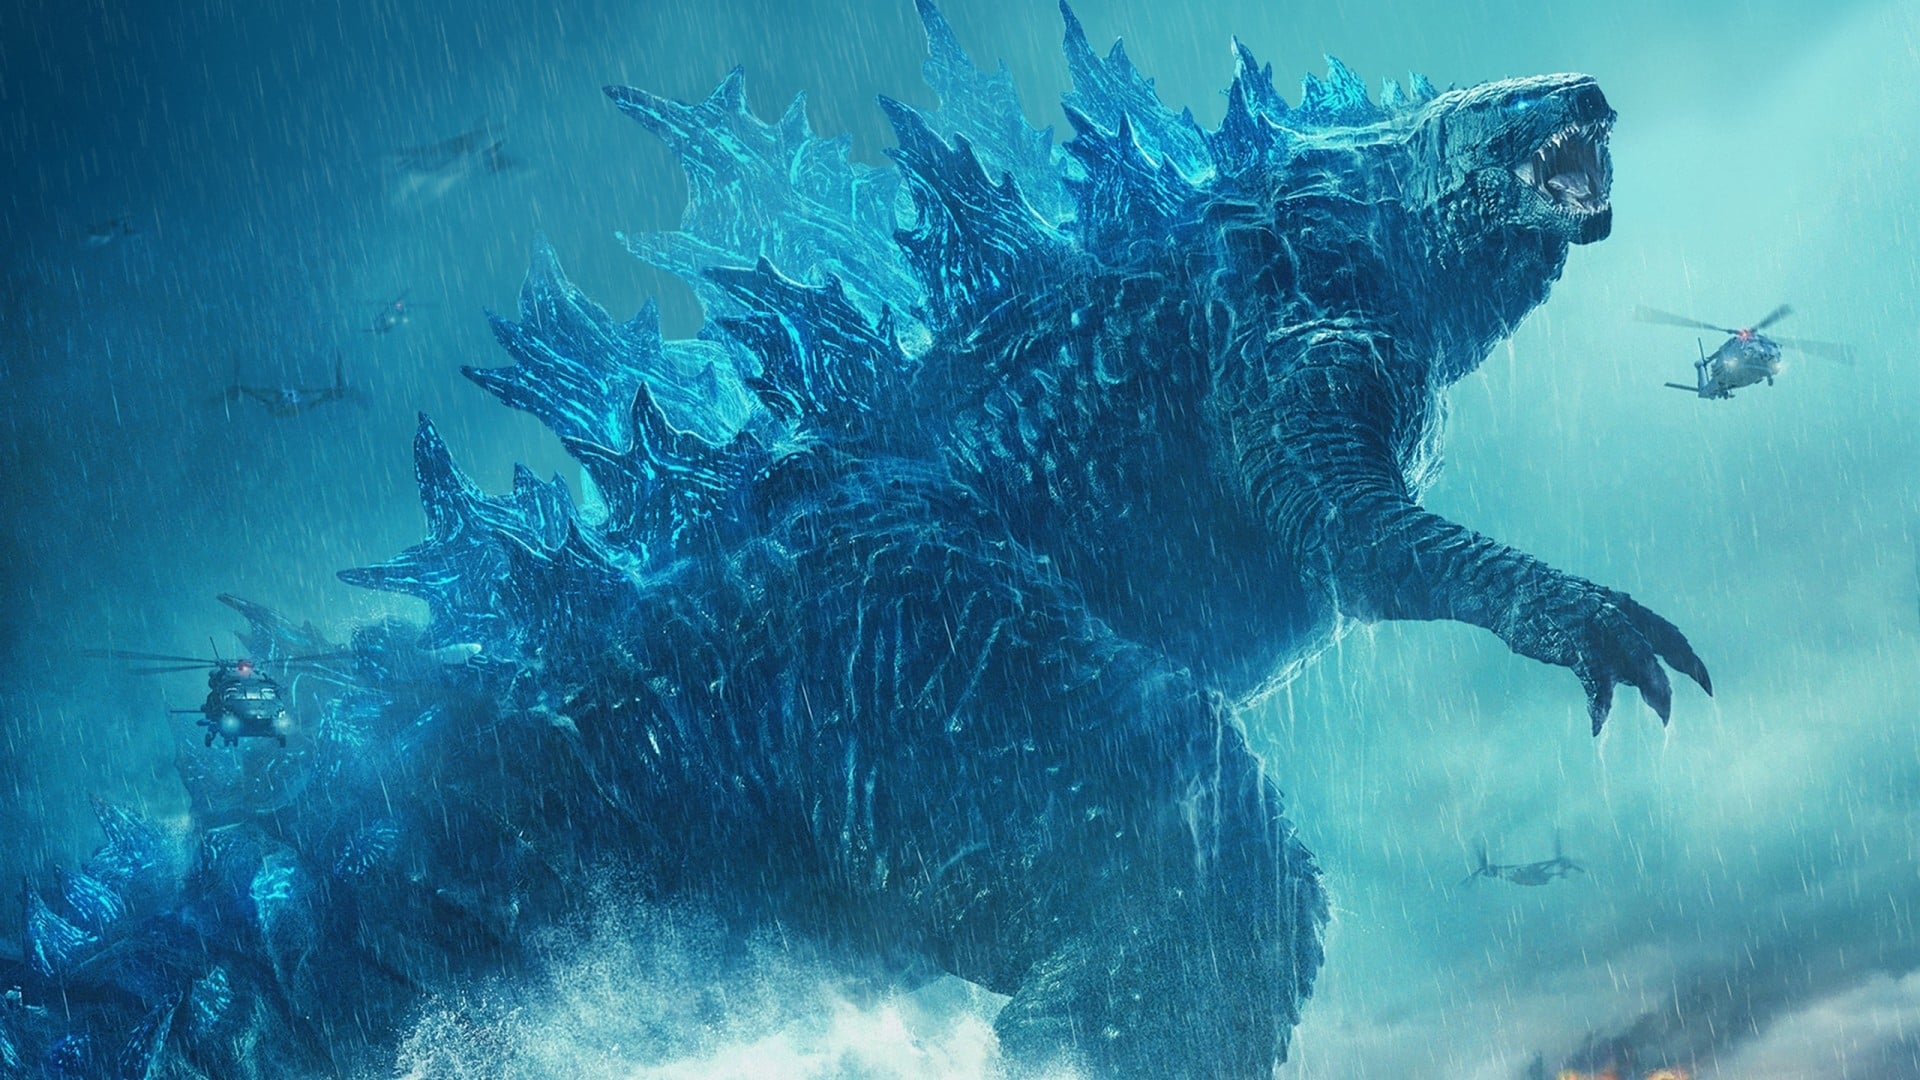 Image du film Godzilla II : roi des monstres jb6ju38hmkx0byhcmaxs8hynej2jpg